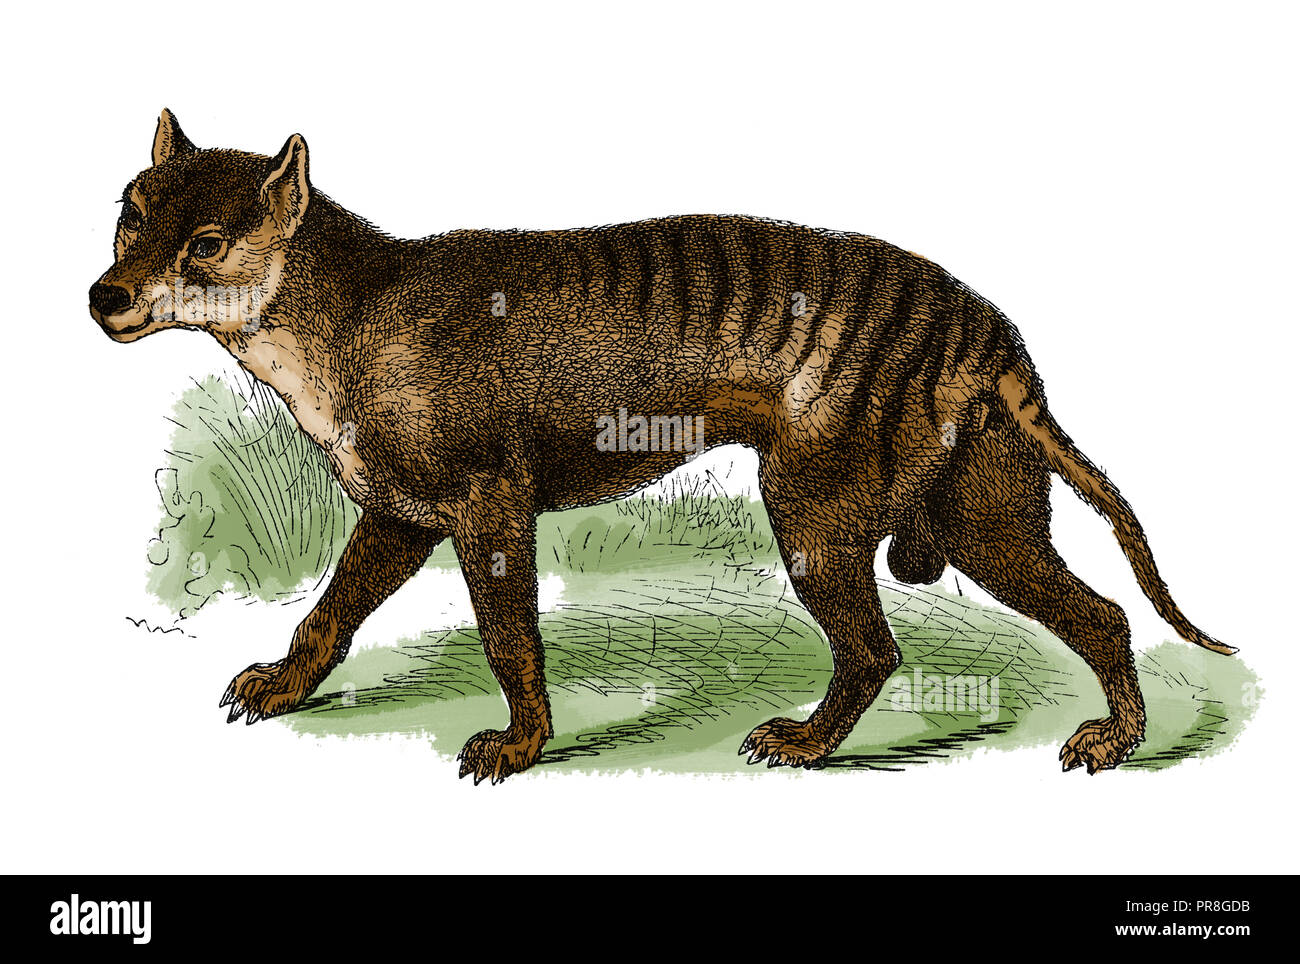 19th century illustration of a thylacine, also known as Tasmanian tiger, or Tasmanian wolf, native to continental Australia, Tasmania and New Guinea - Stock Photo